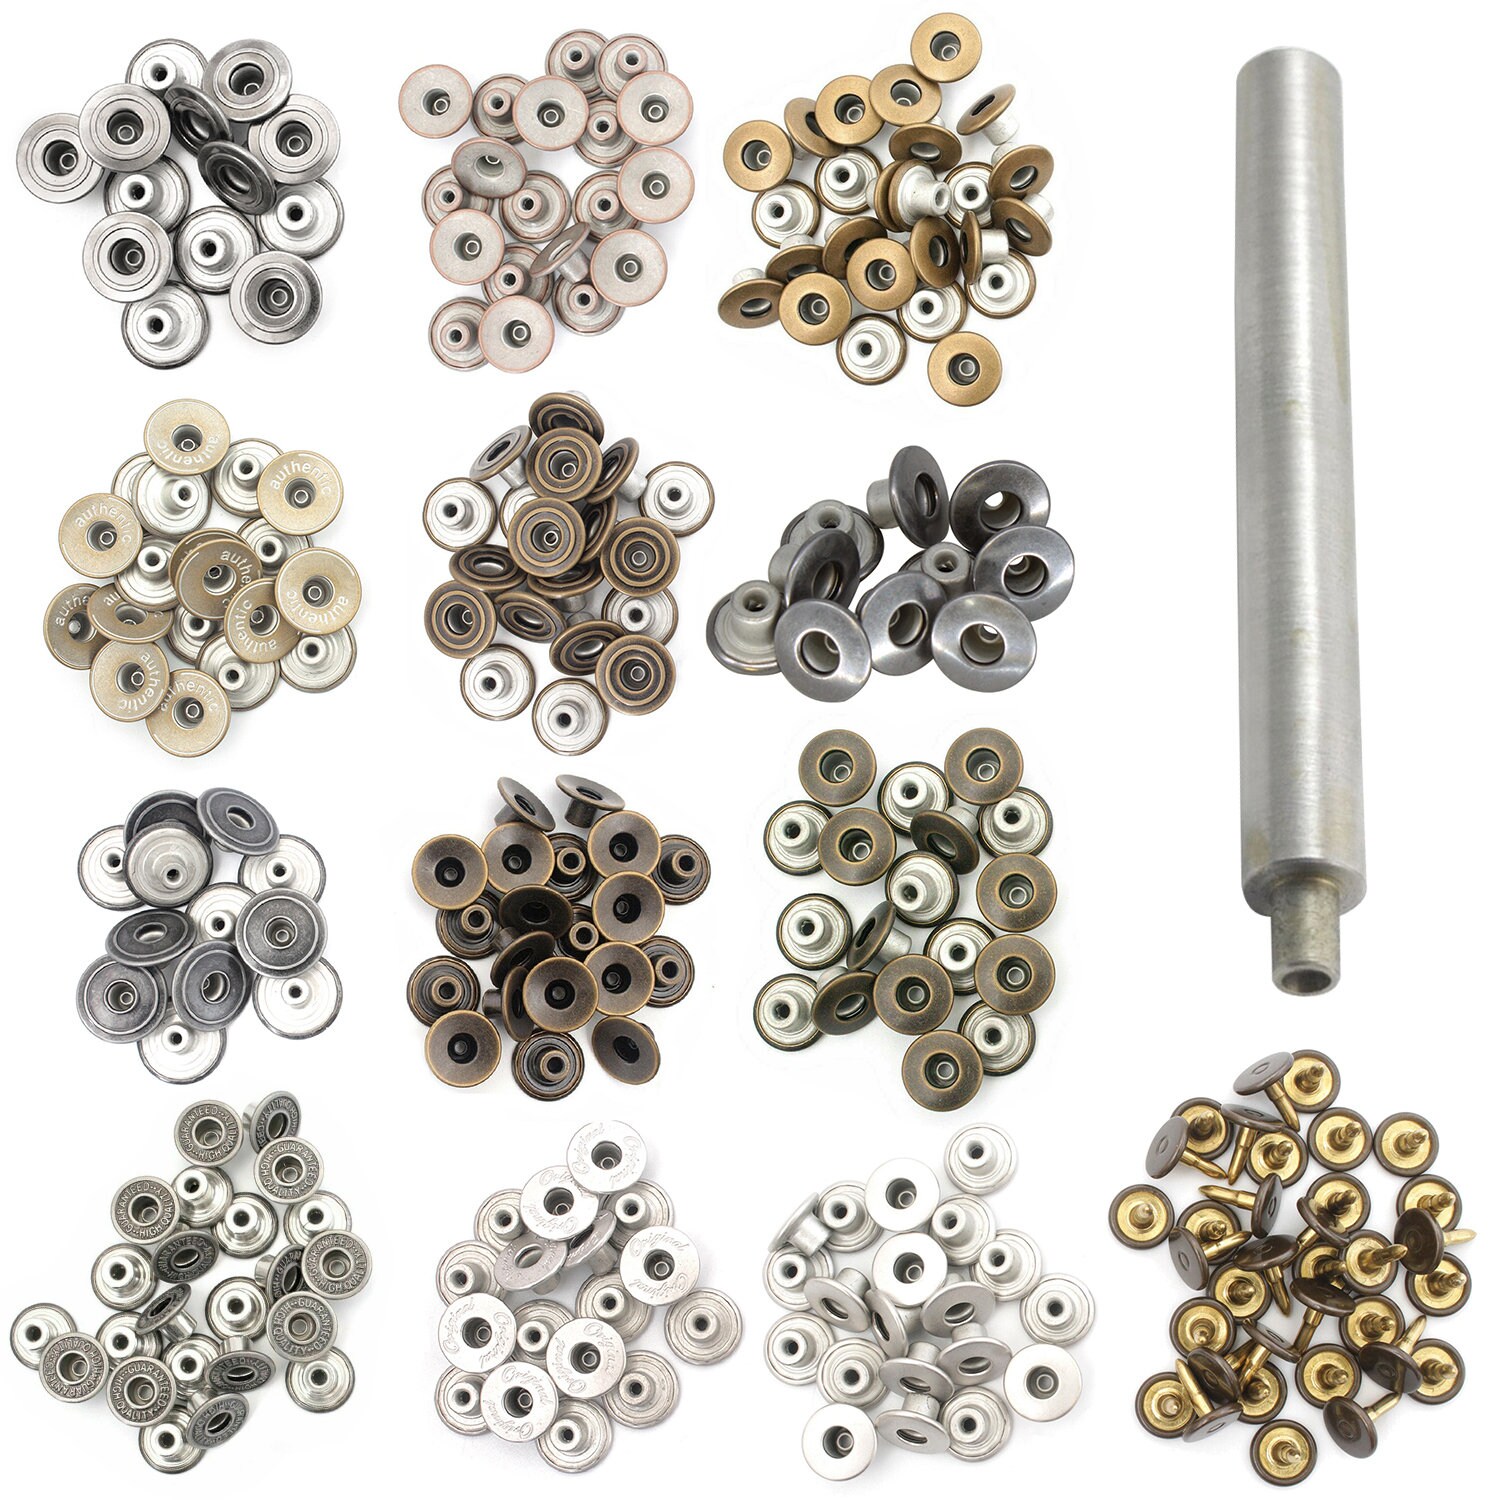 Trimming Shop 14mm Replacement Jean Buttons with Back Pins Rivet, Gunmetal,  100pcs Set 